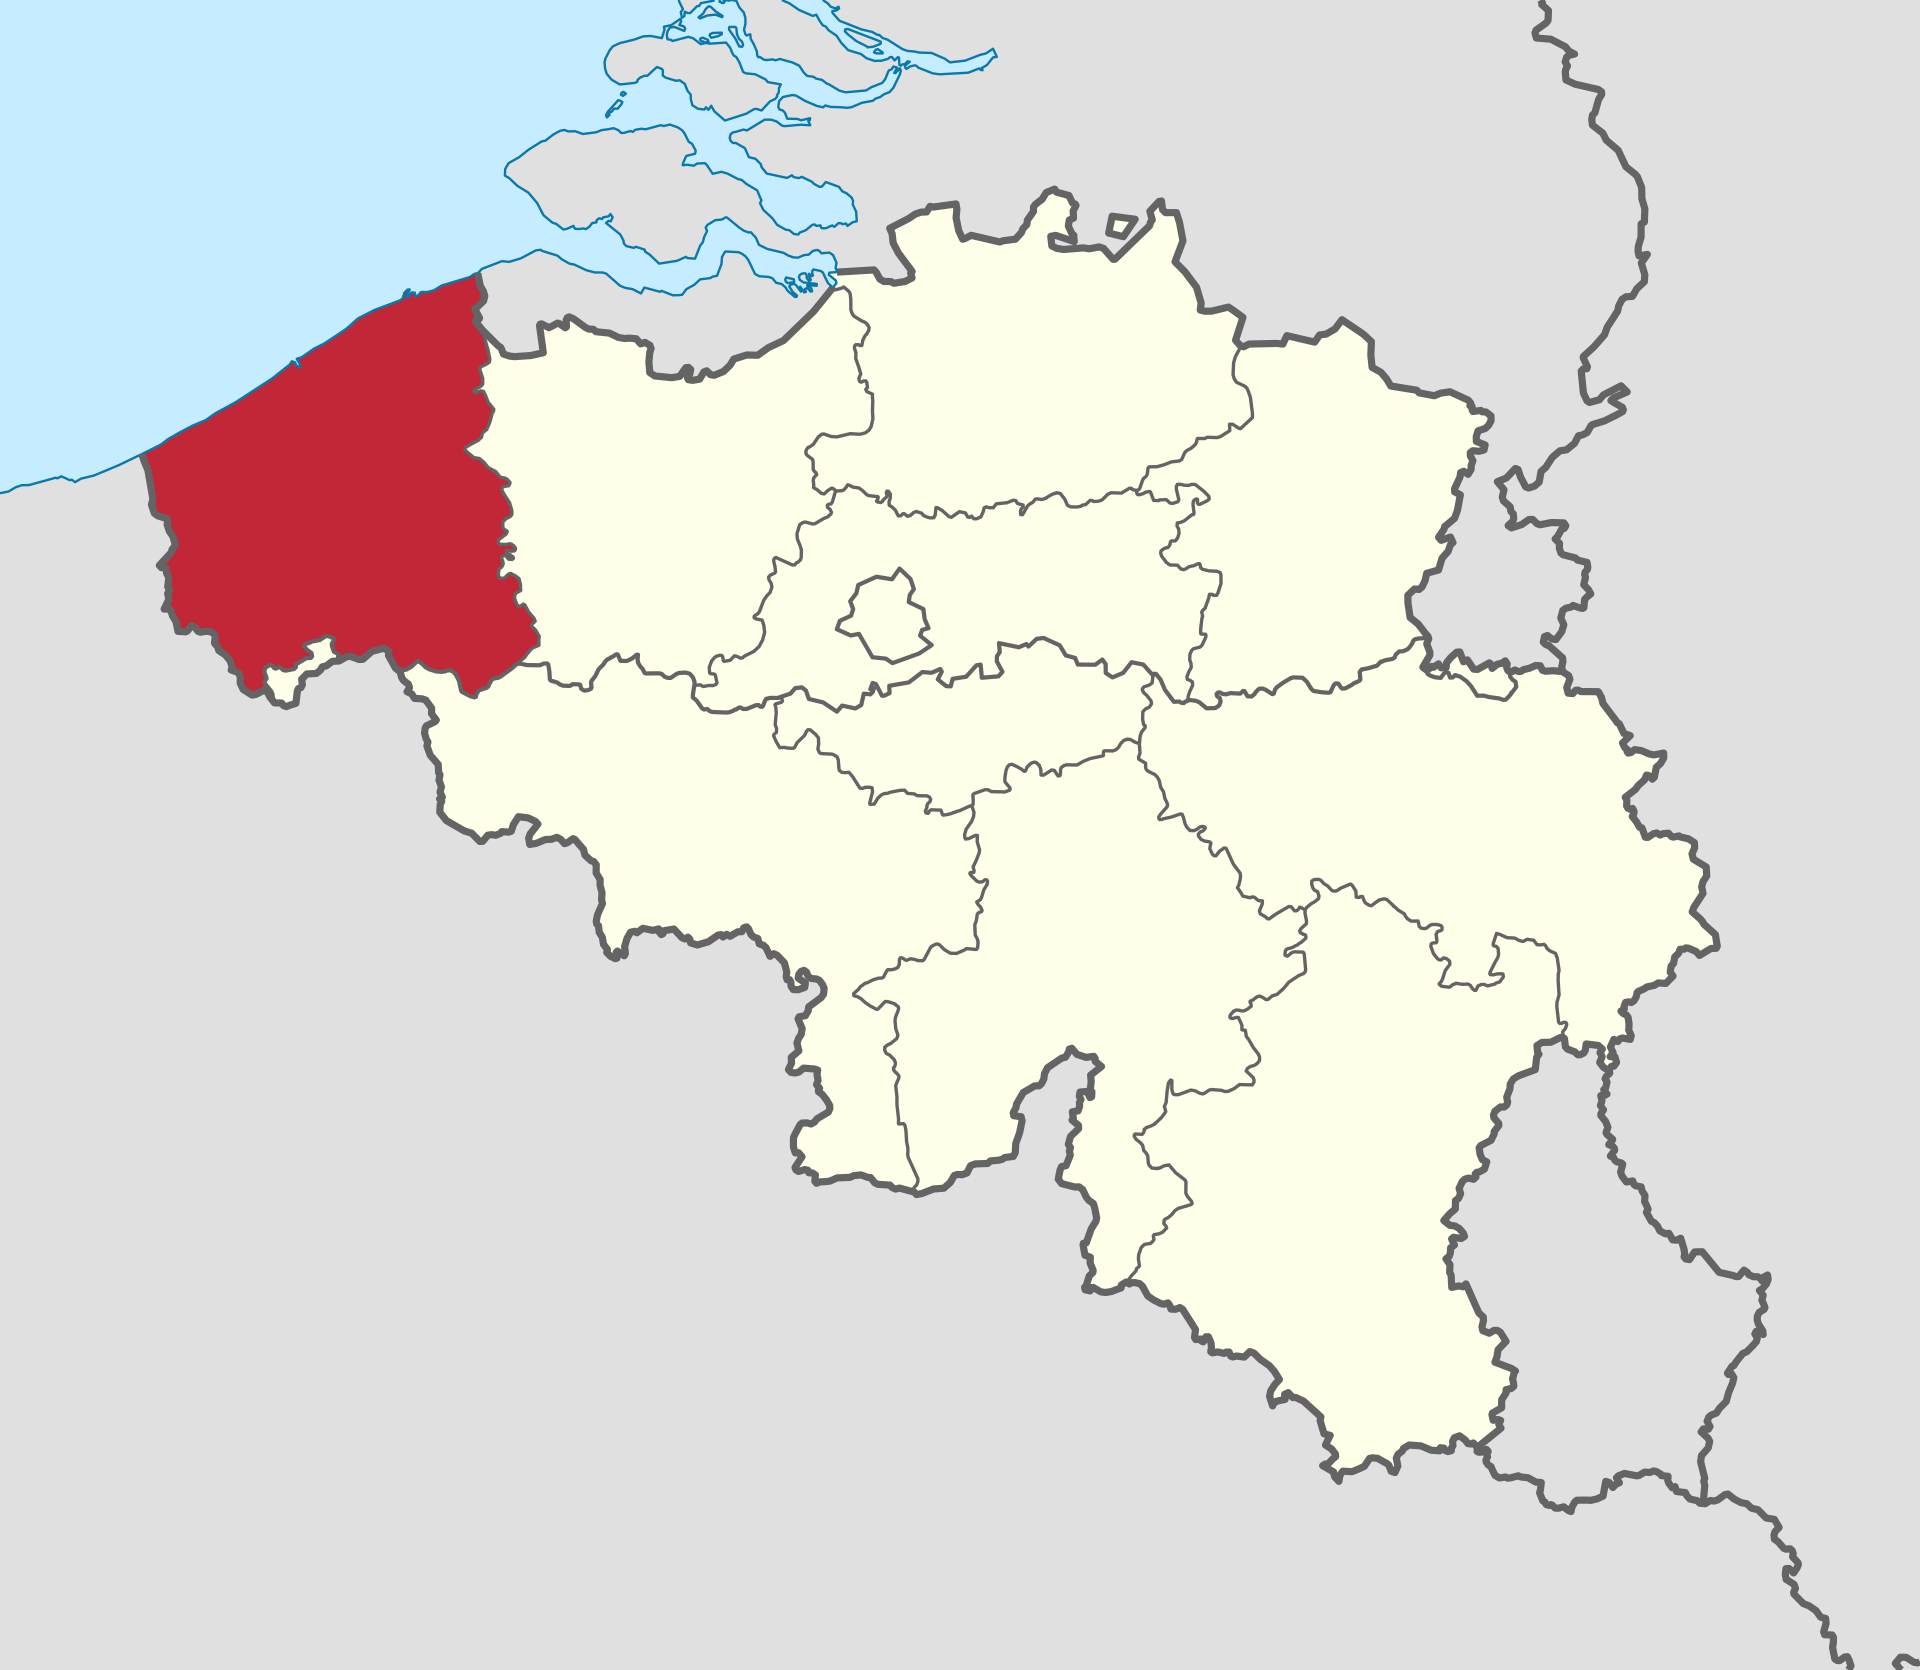 Batterie 3.823 Urbex location or around the region West-Vlaanderen (Vlaams Gewest), Belgium